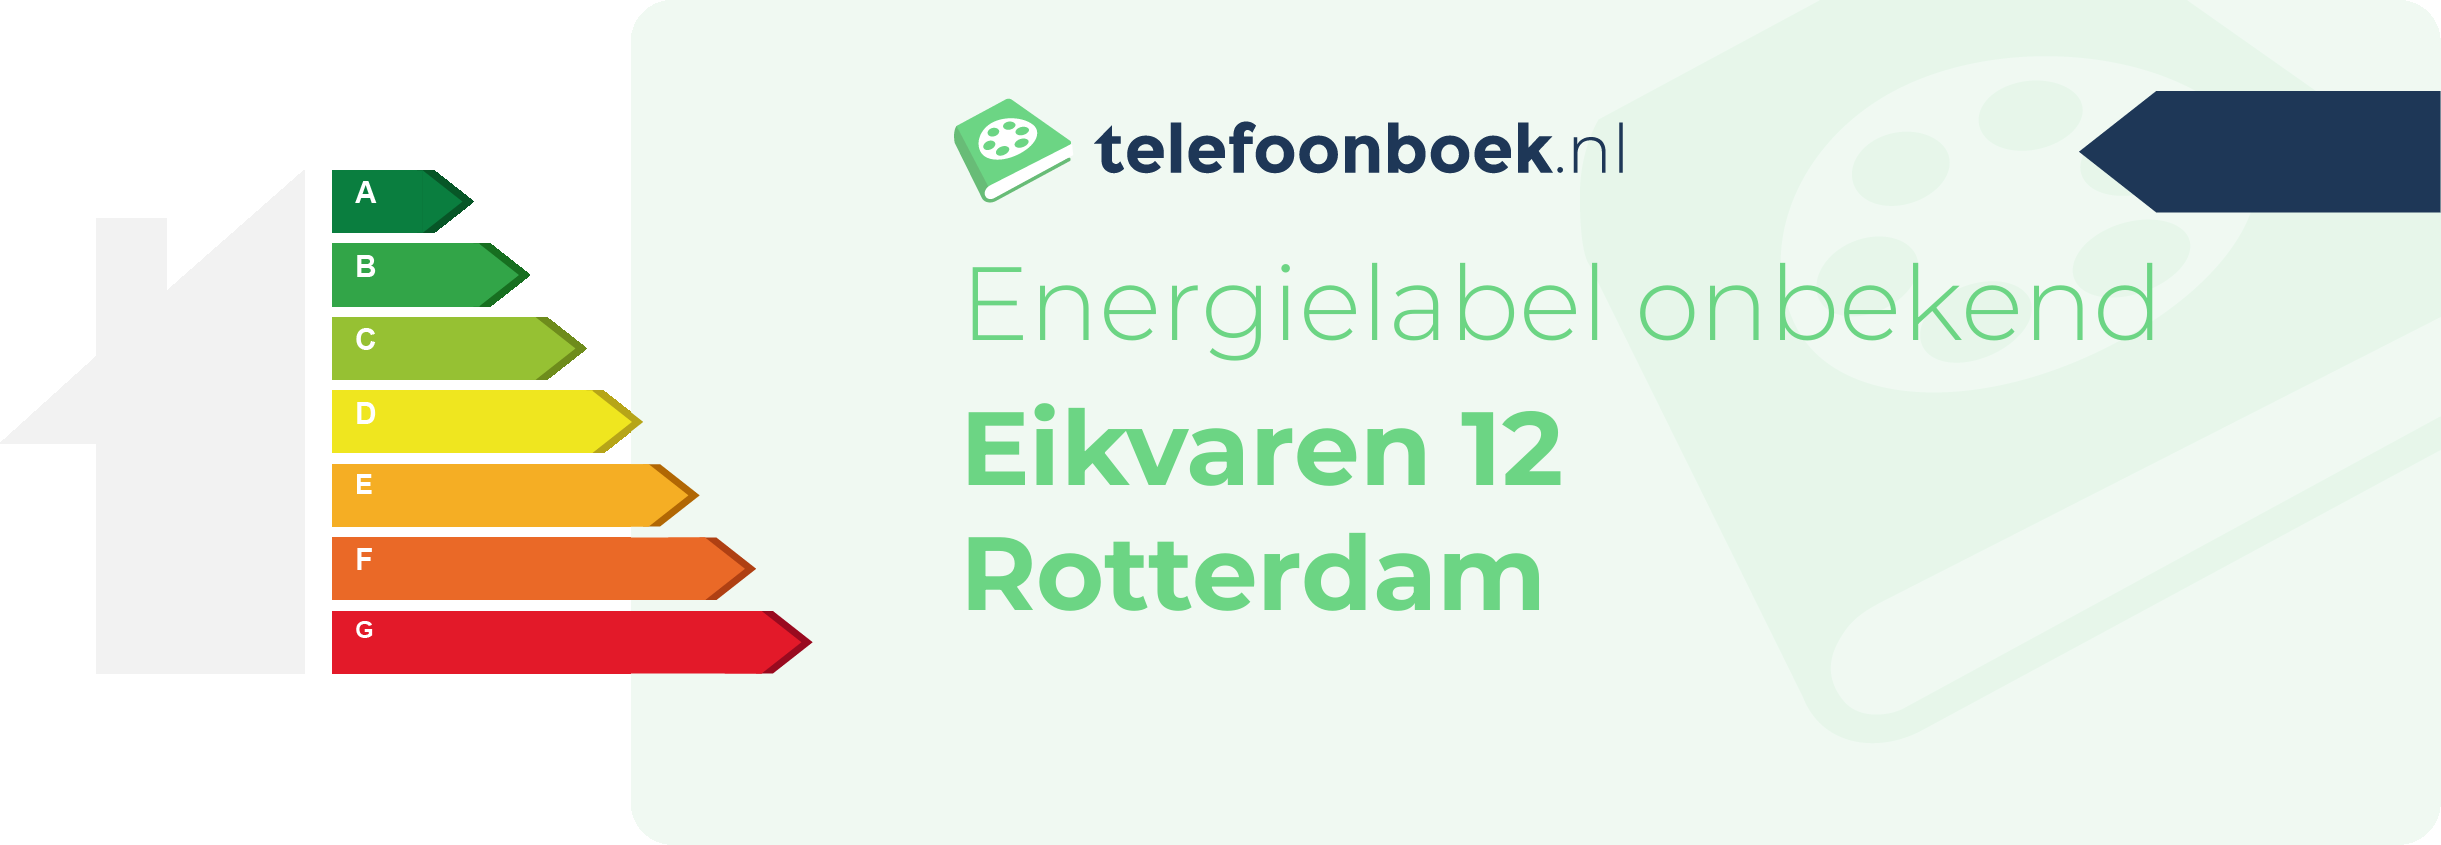 Energielabel Eikvaren 12 Rotterdam